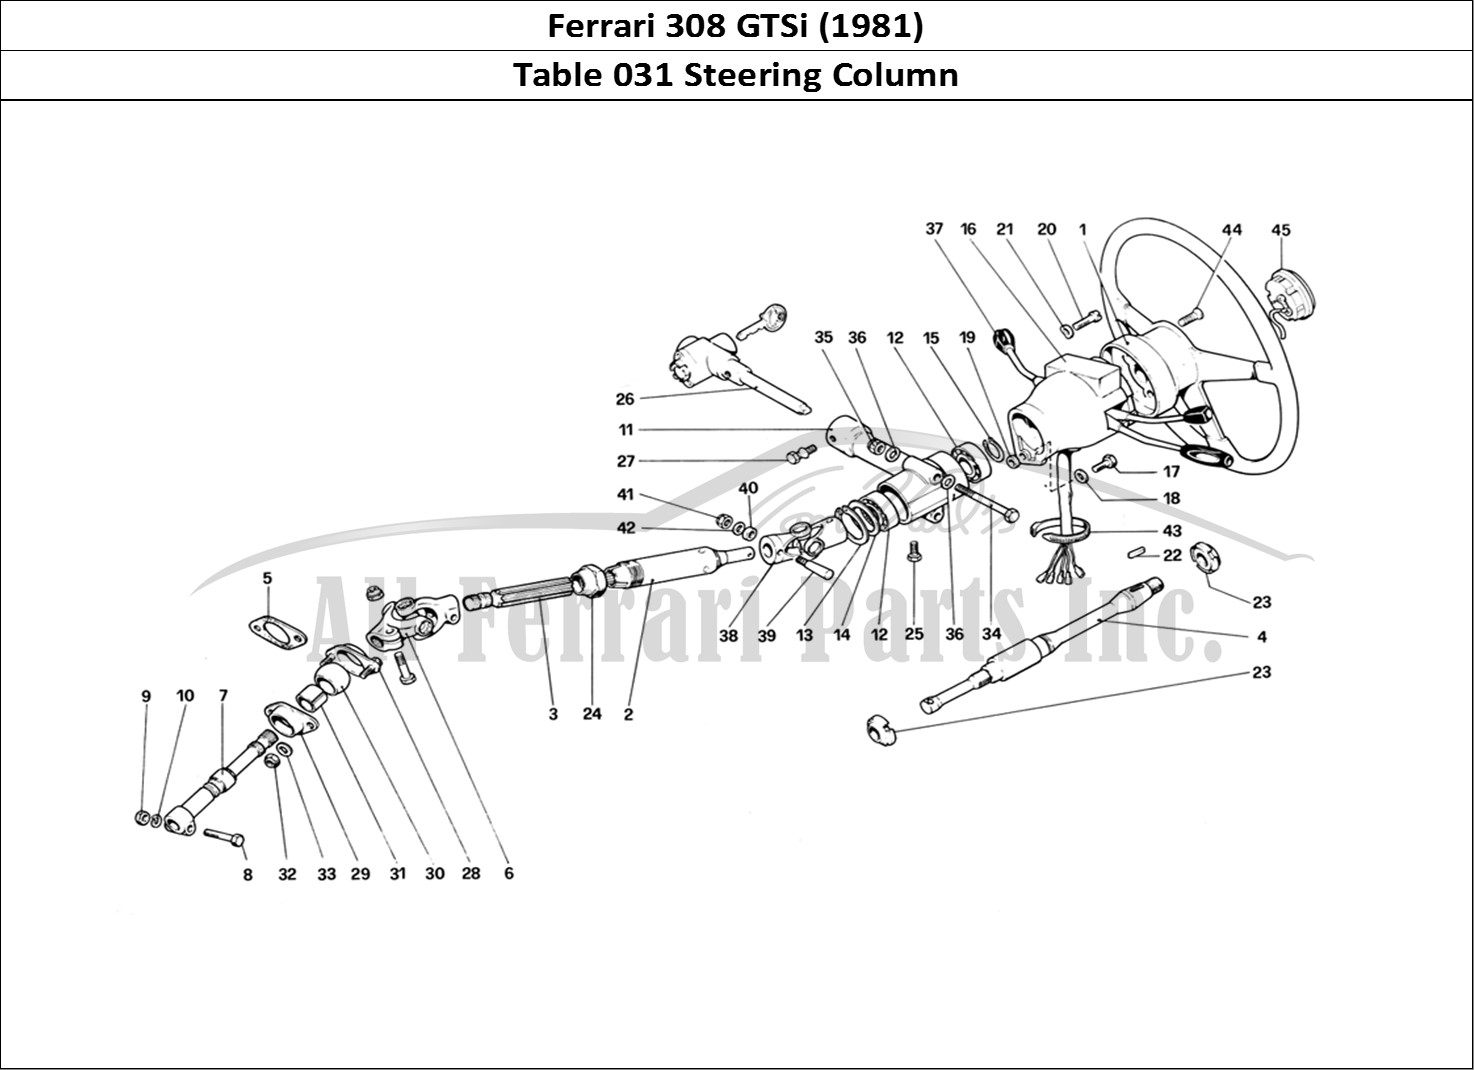 Ferrari Parts Ferrari 308 GTBi (1981) Page 031 Steering Column